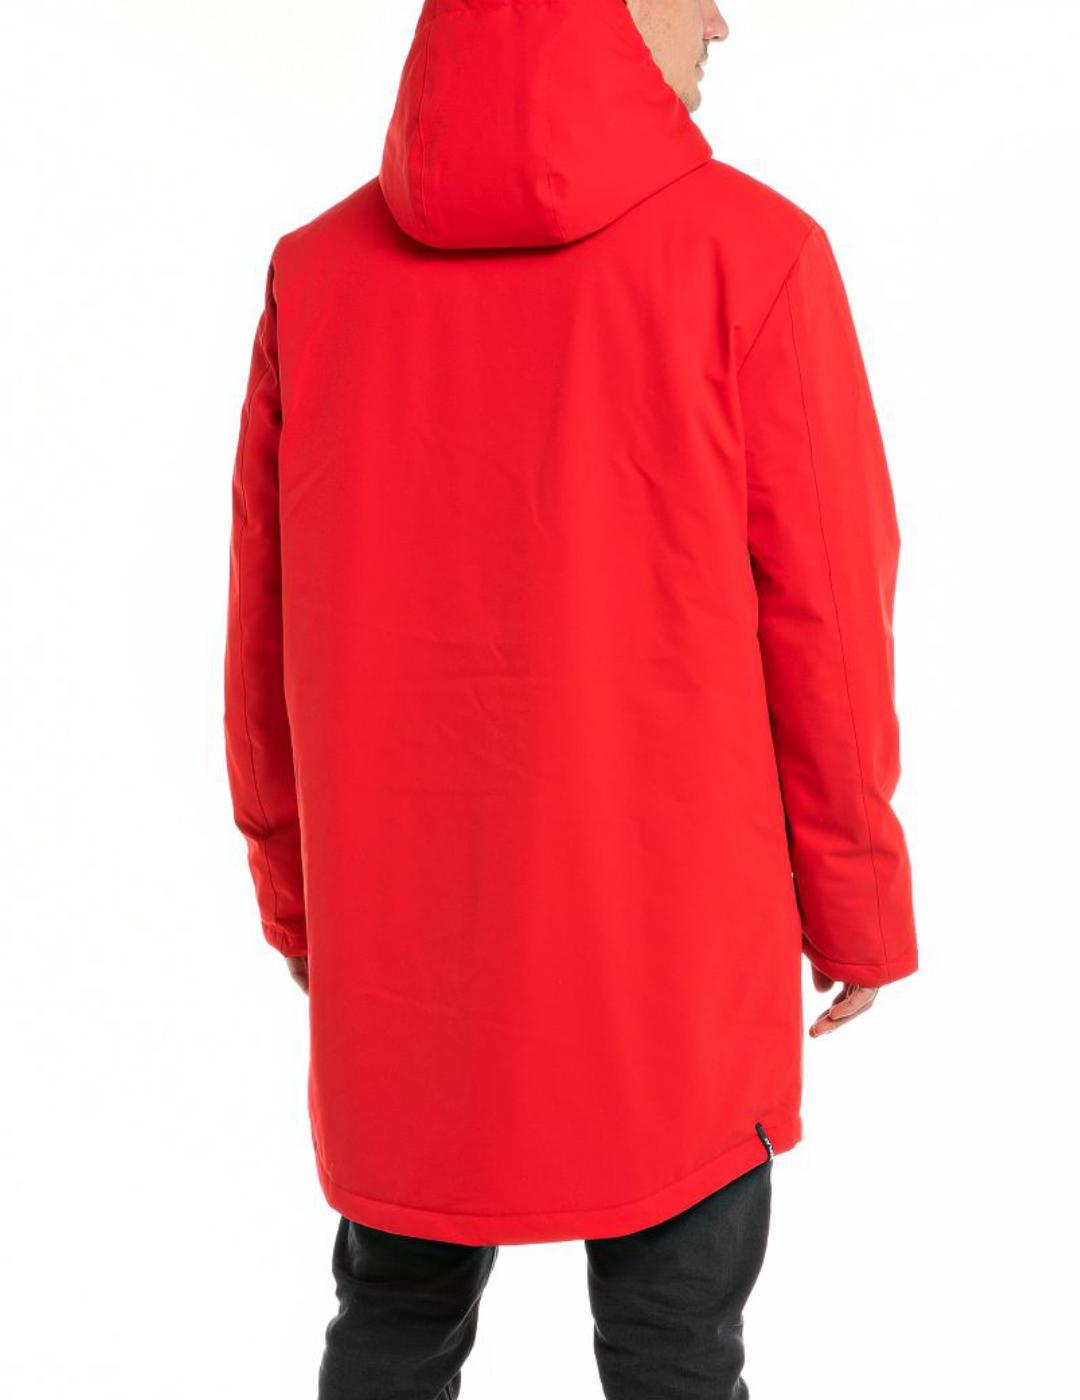 Chaqueta Replay rojo larga con capucha  para hombre